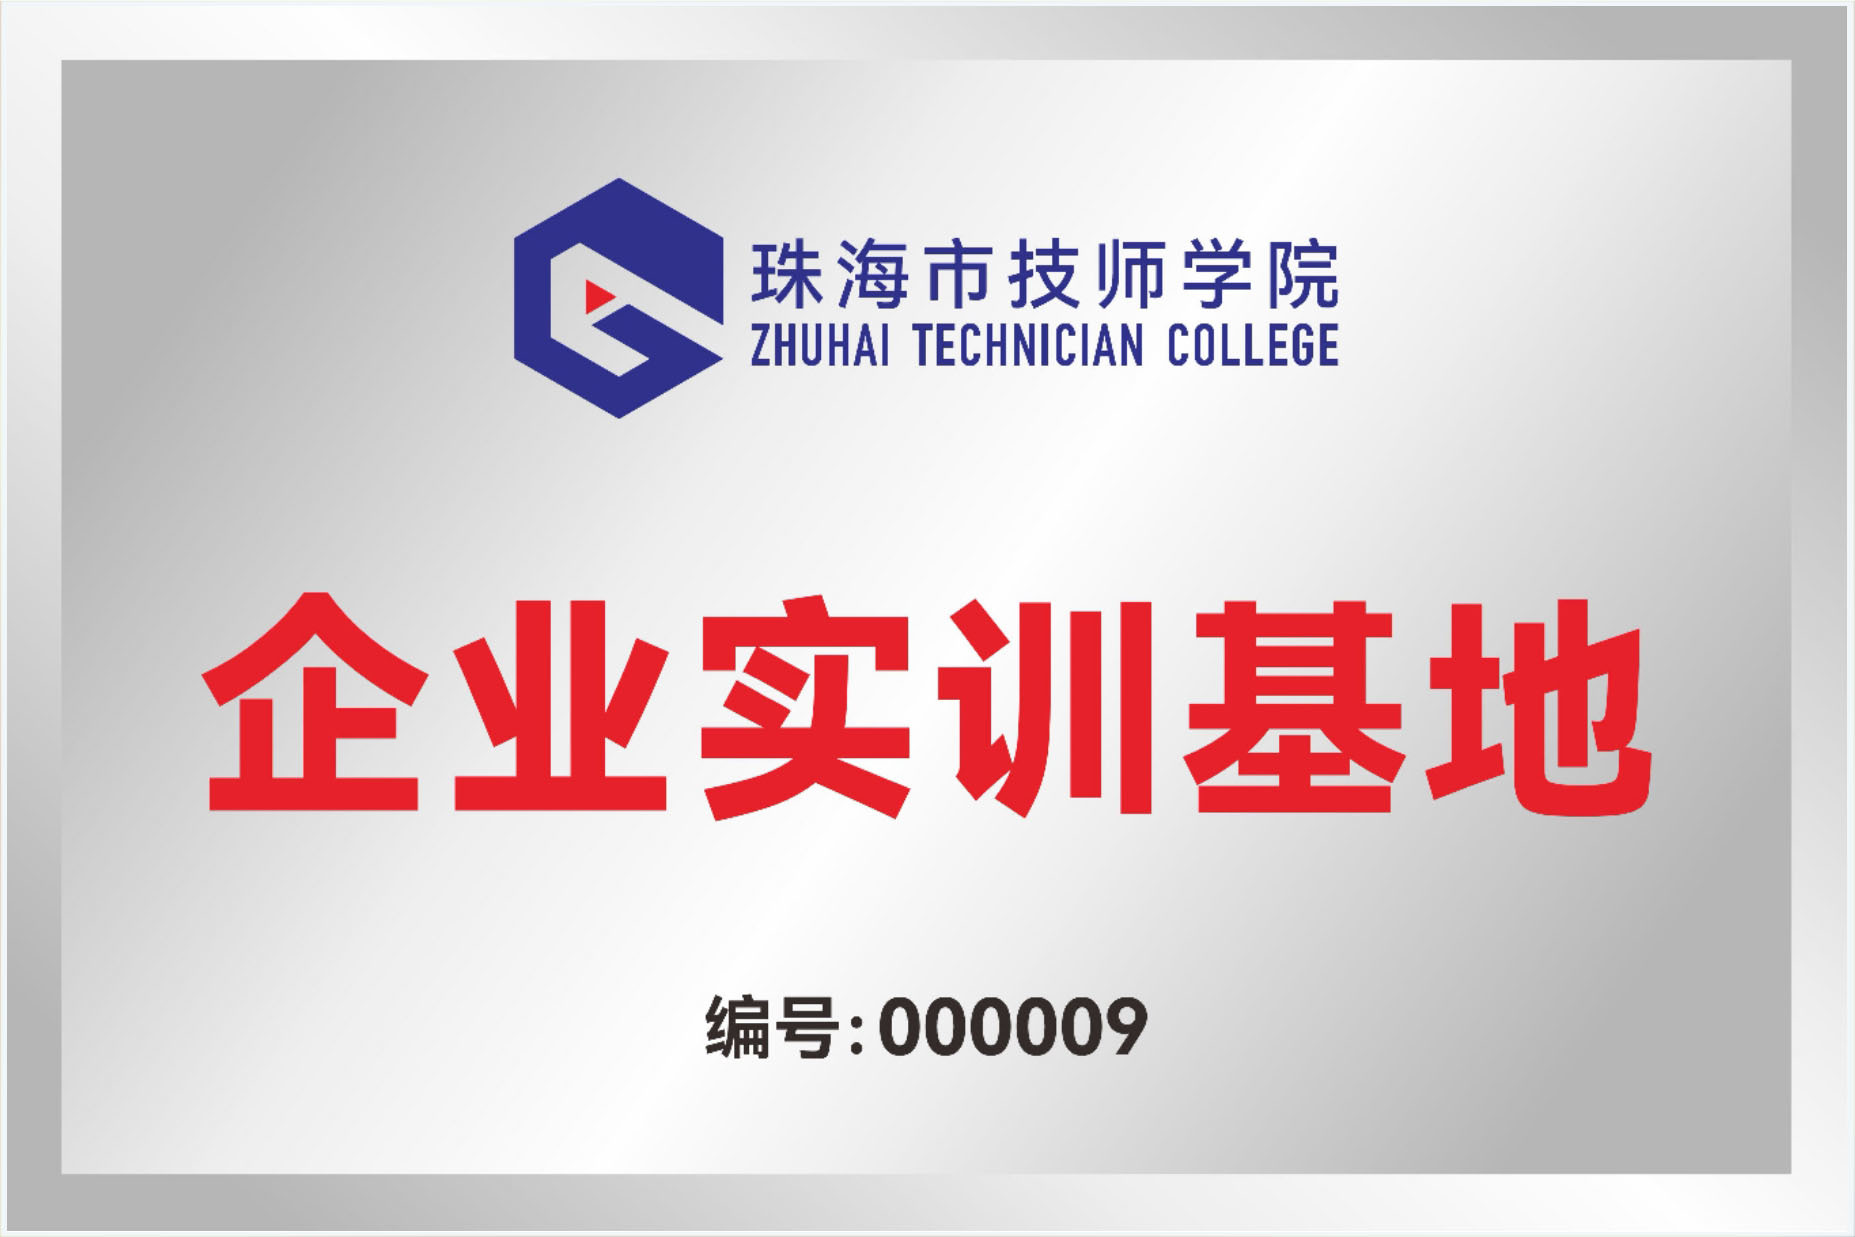 Zhuhai Technician College Enterprise Training Base